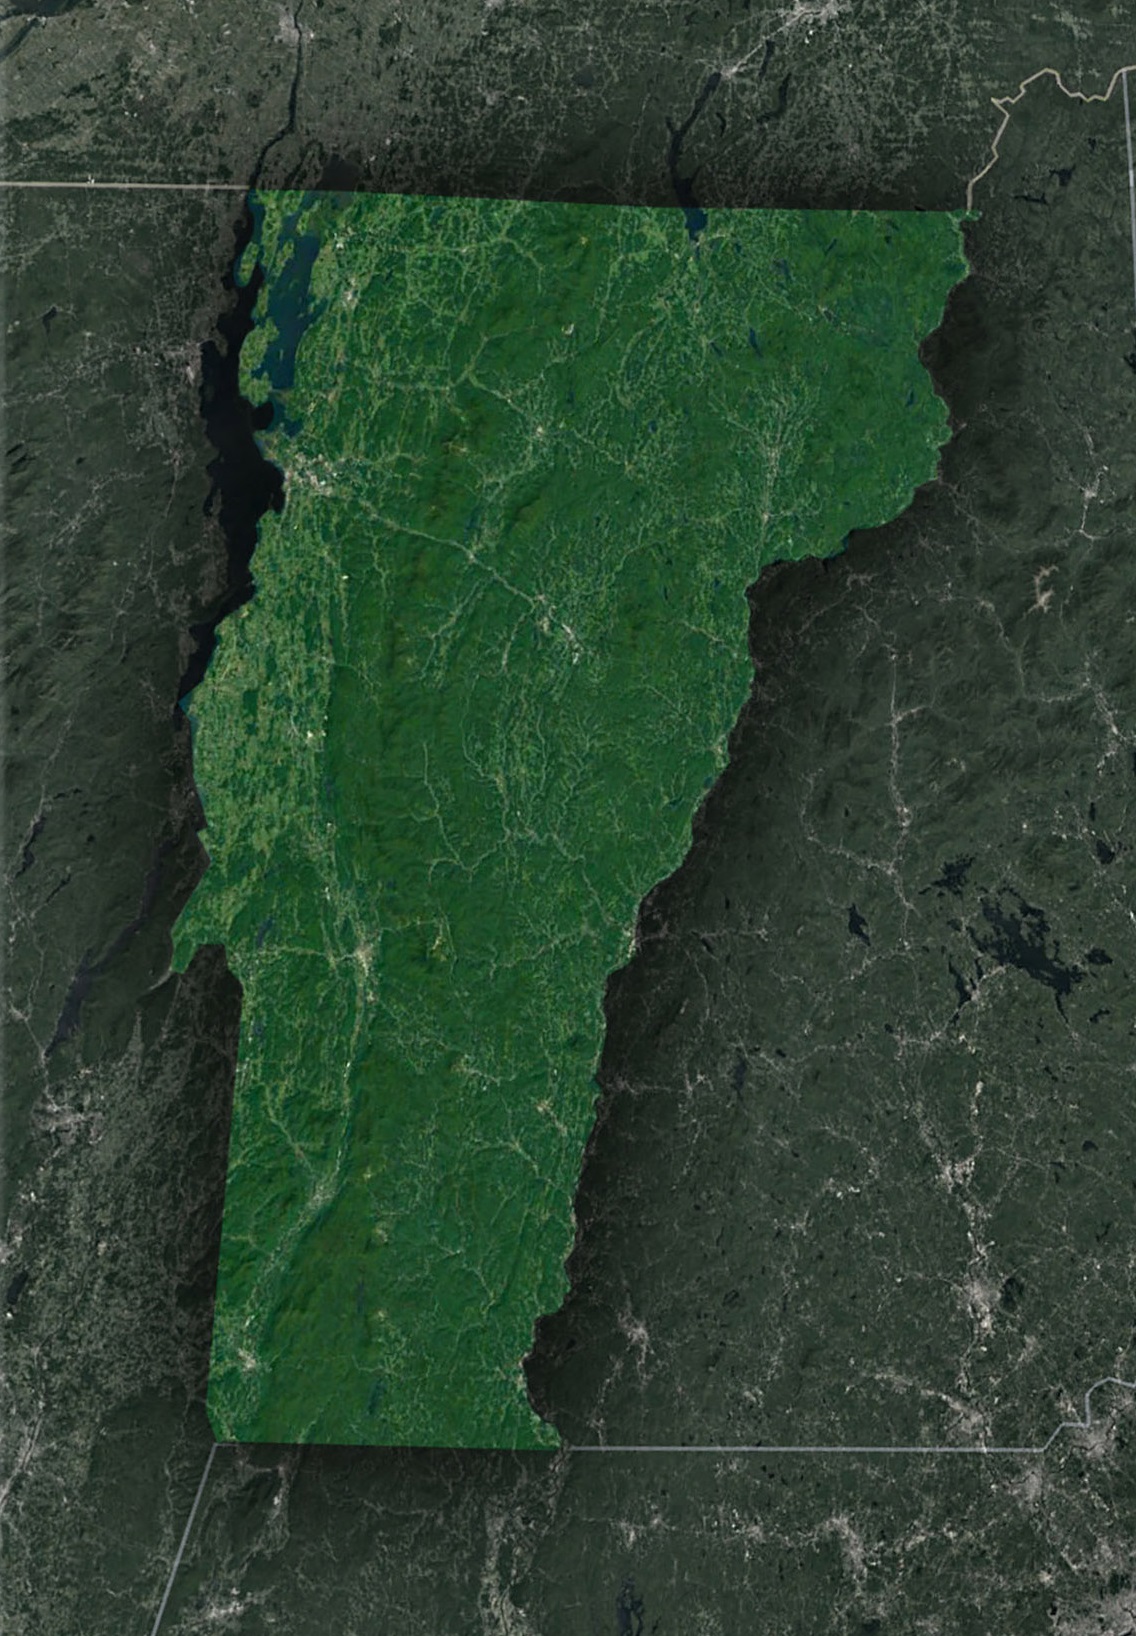 Satellite Map of Vermont